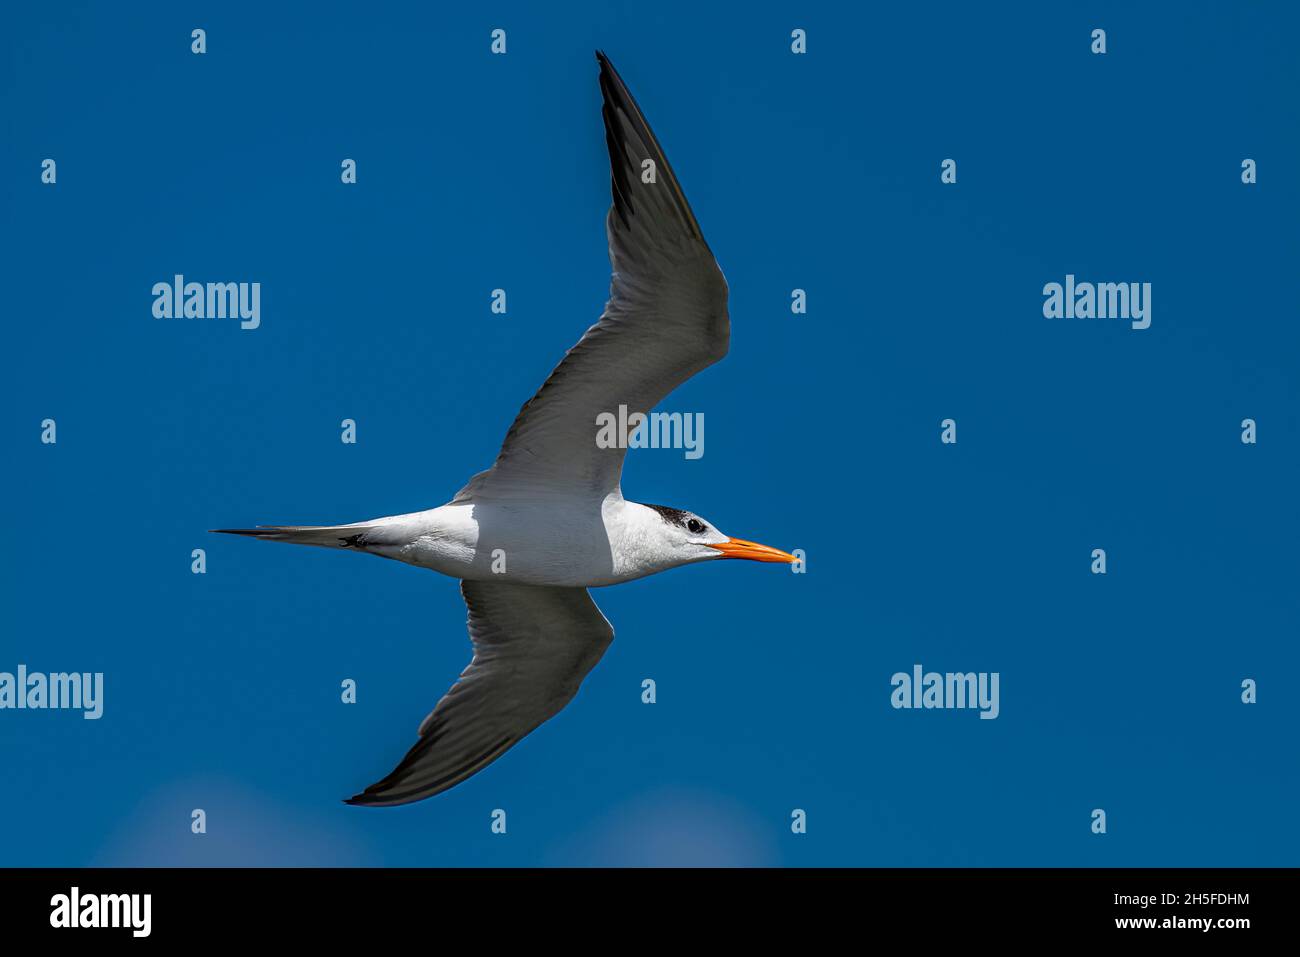 Tern bird gliding in blue sky Stock Photo